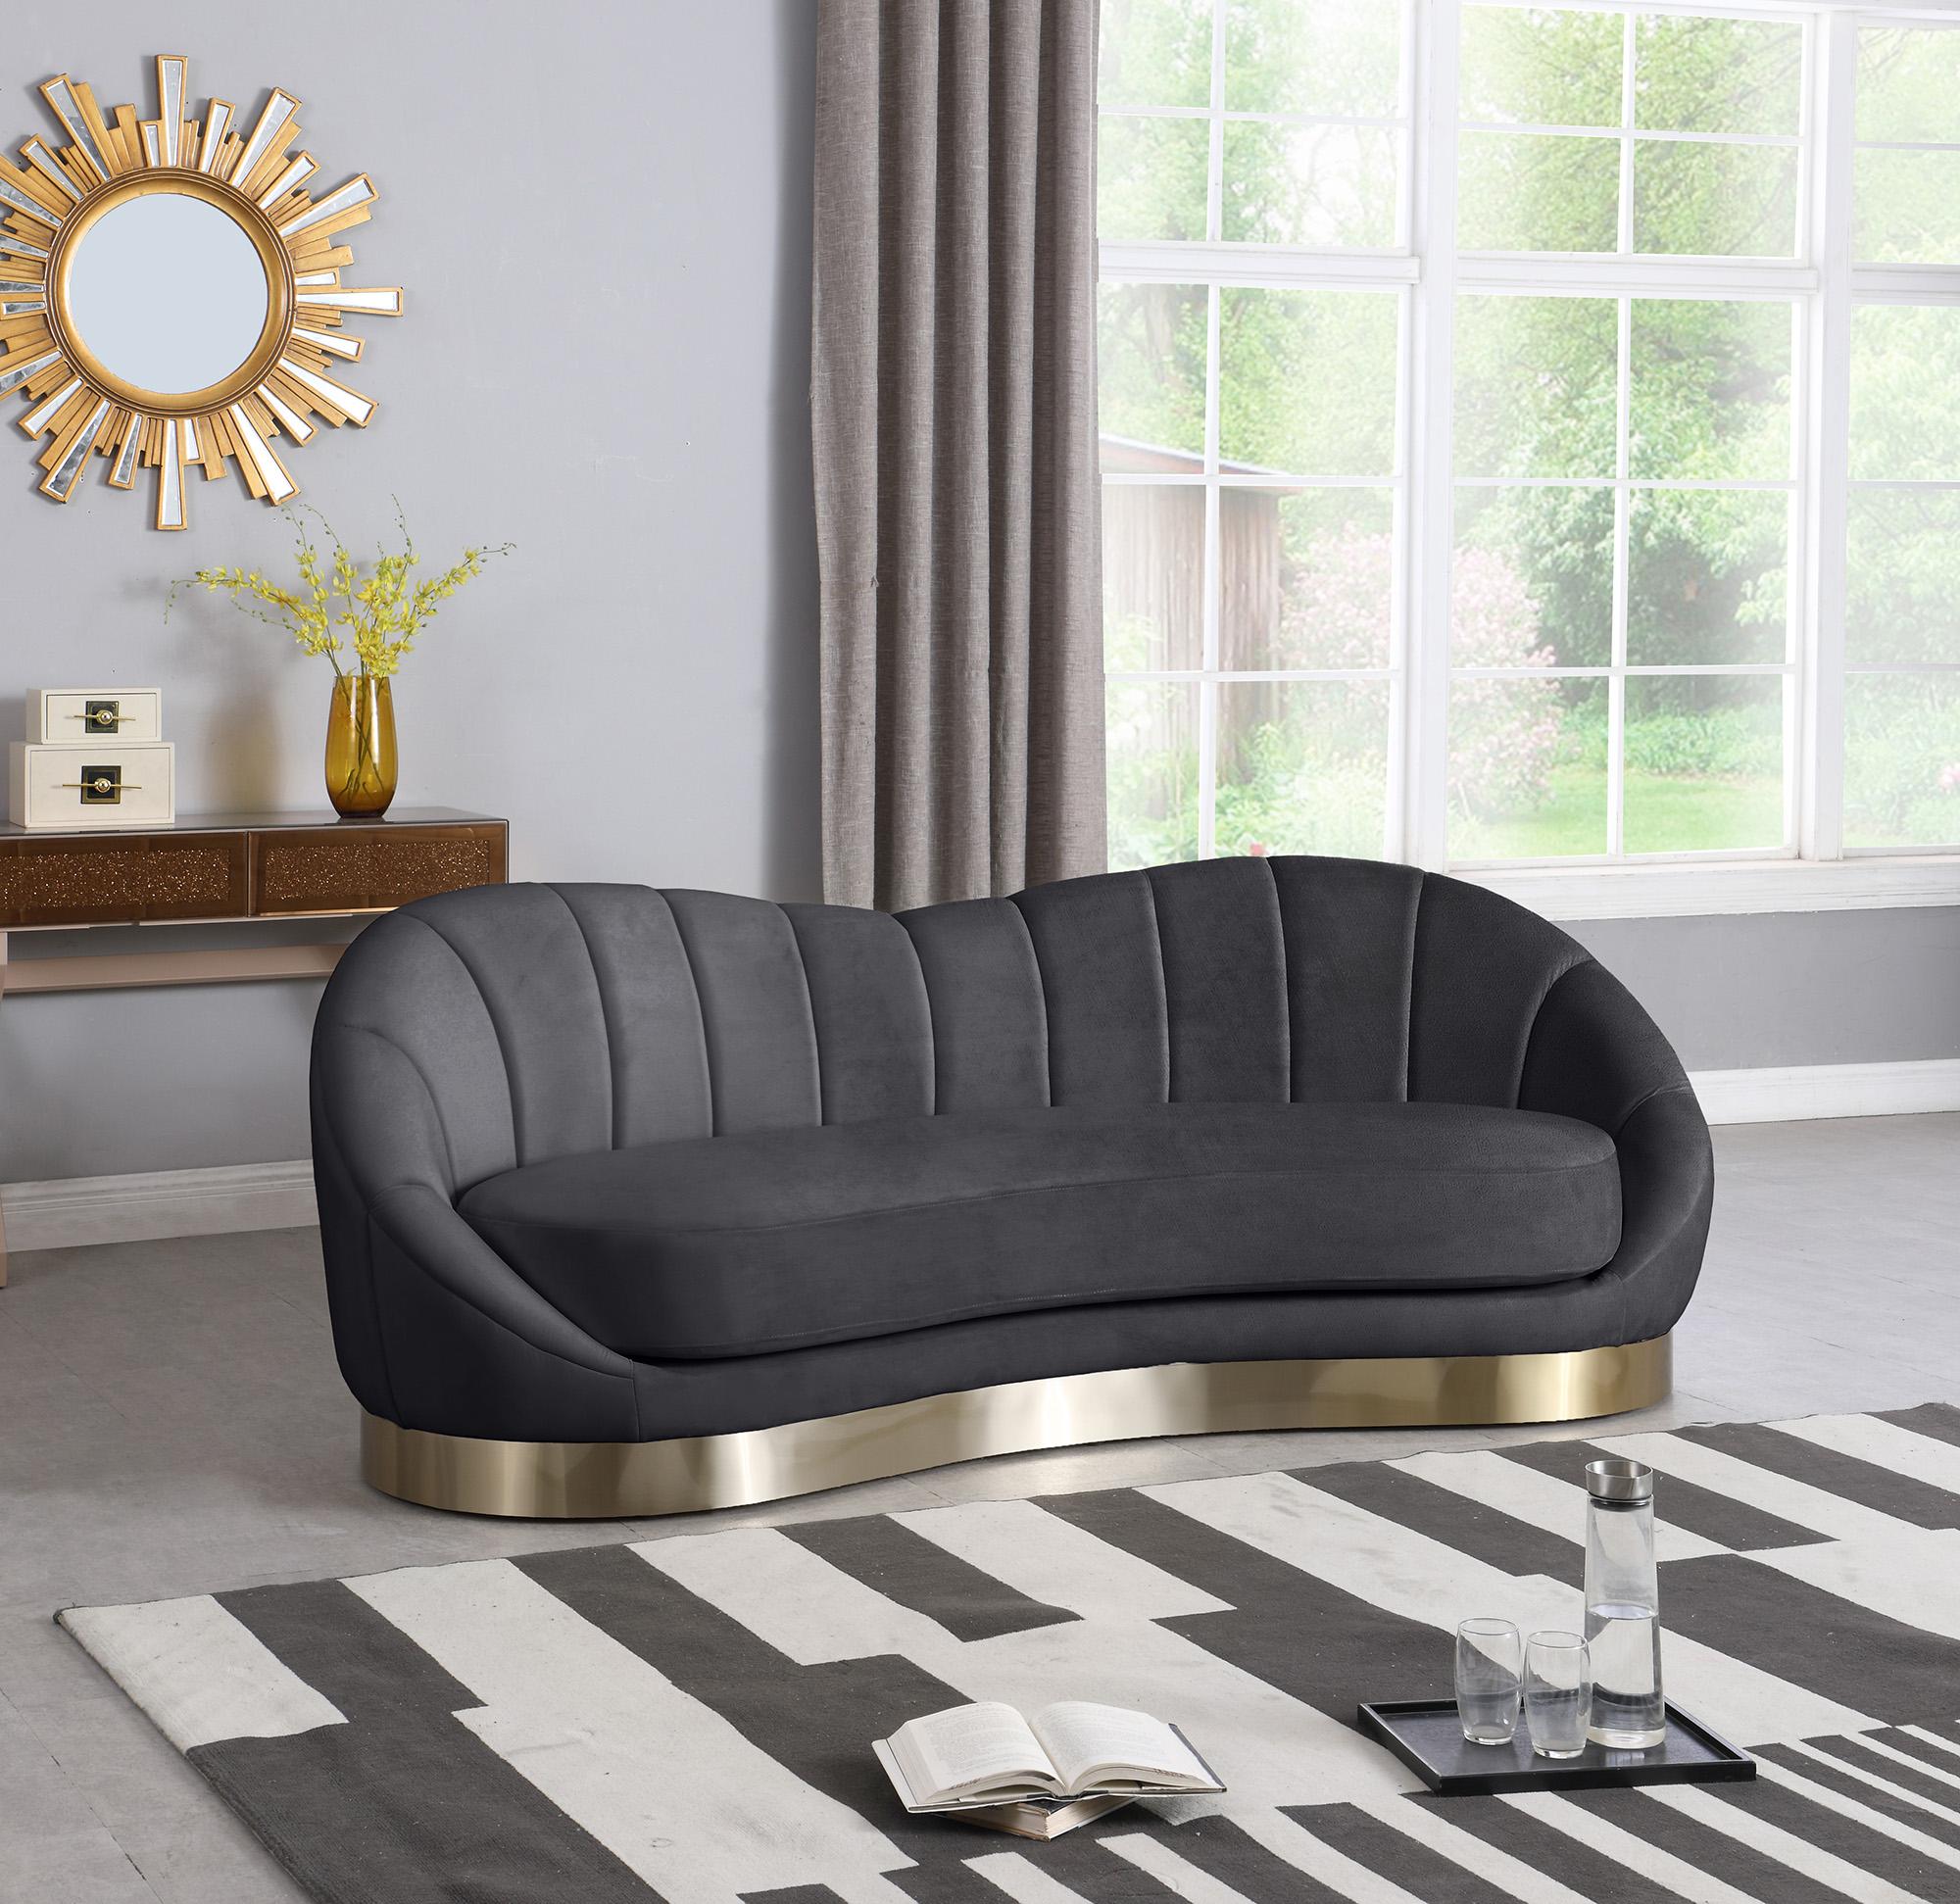 

    
623Grey-S Meridian Furniture Sofa
